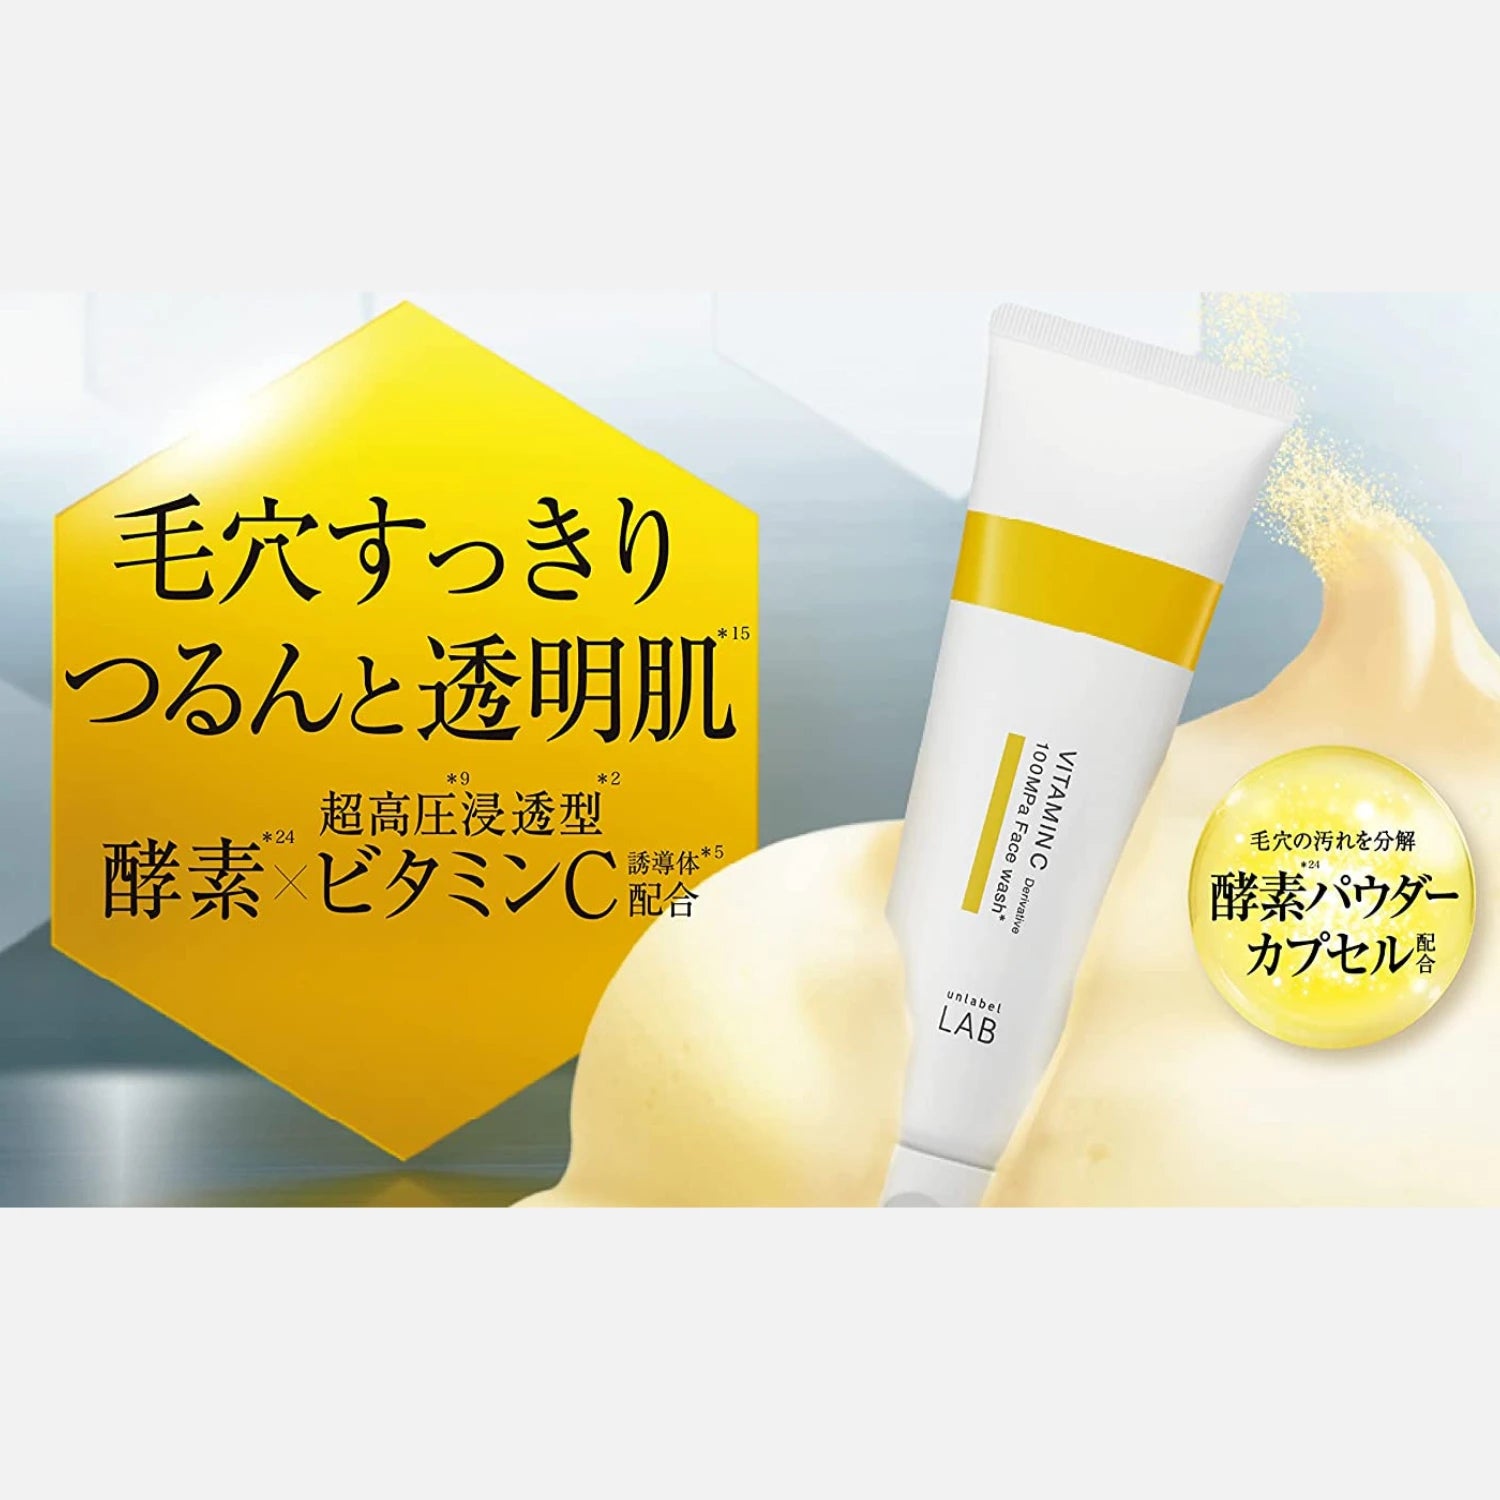 Unlabel LAB Vitamin C Derivative Face Wash 130g - Buy Me Japan